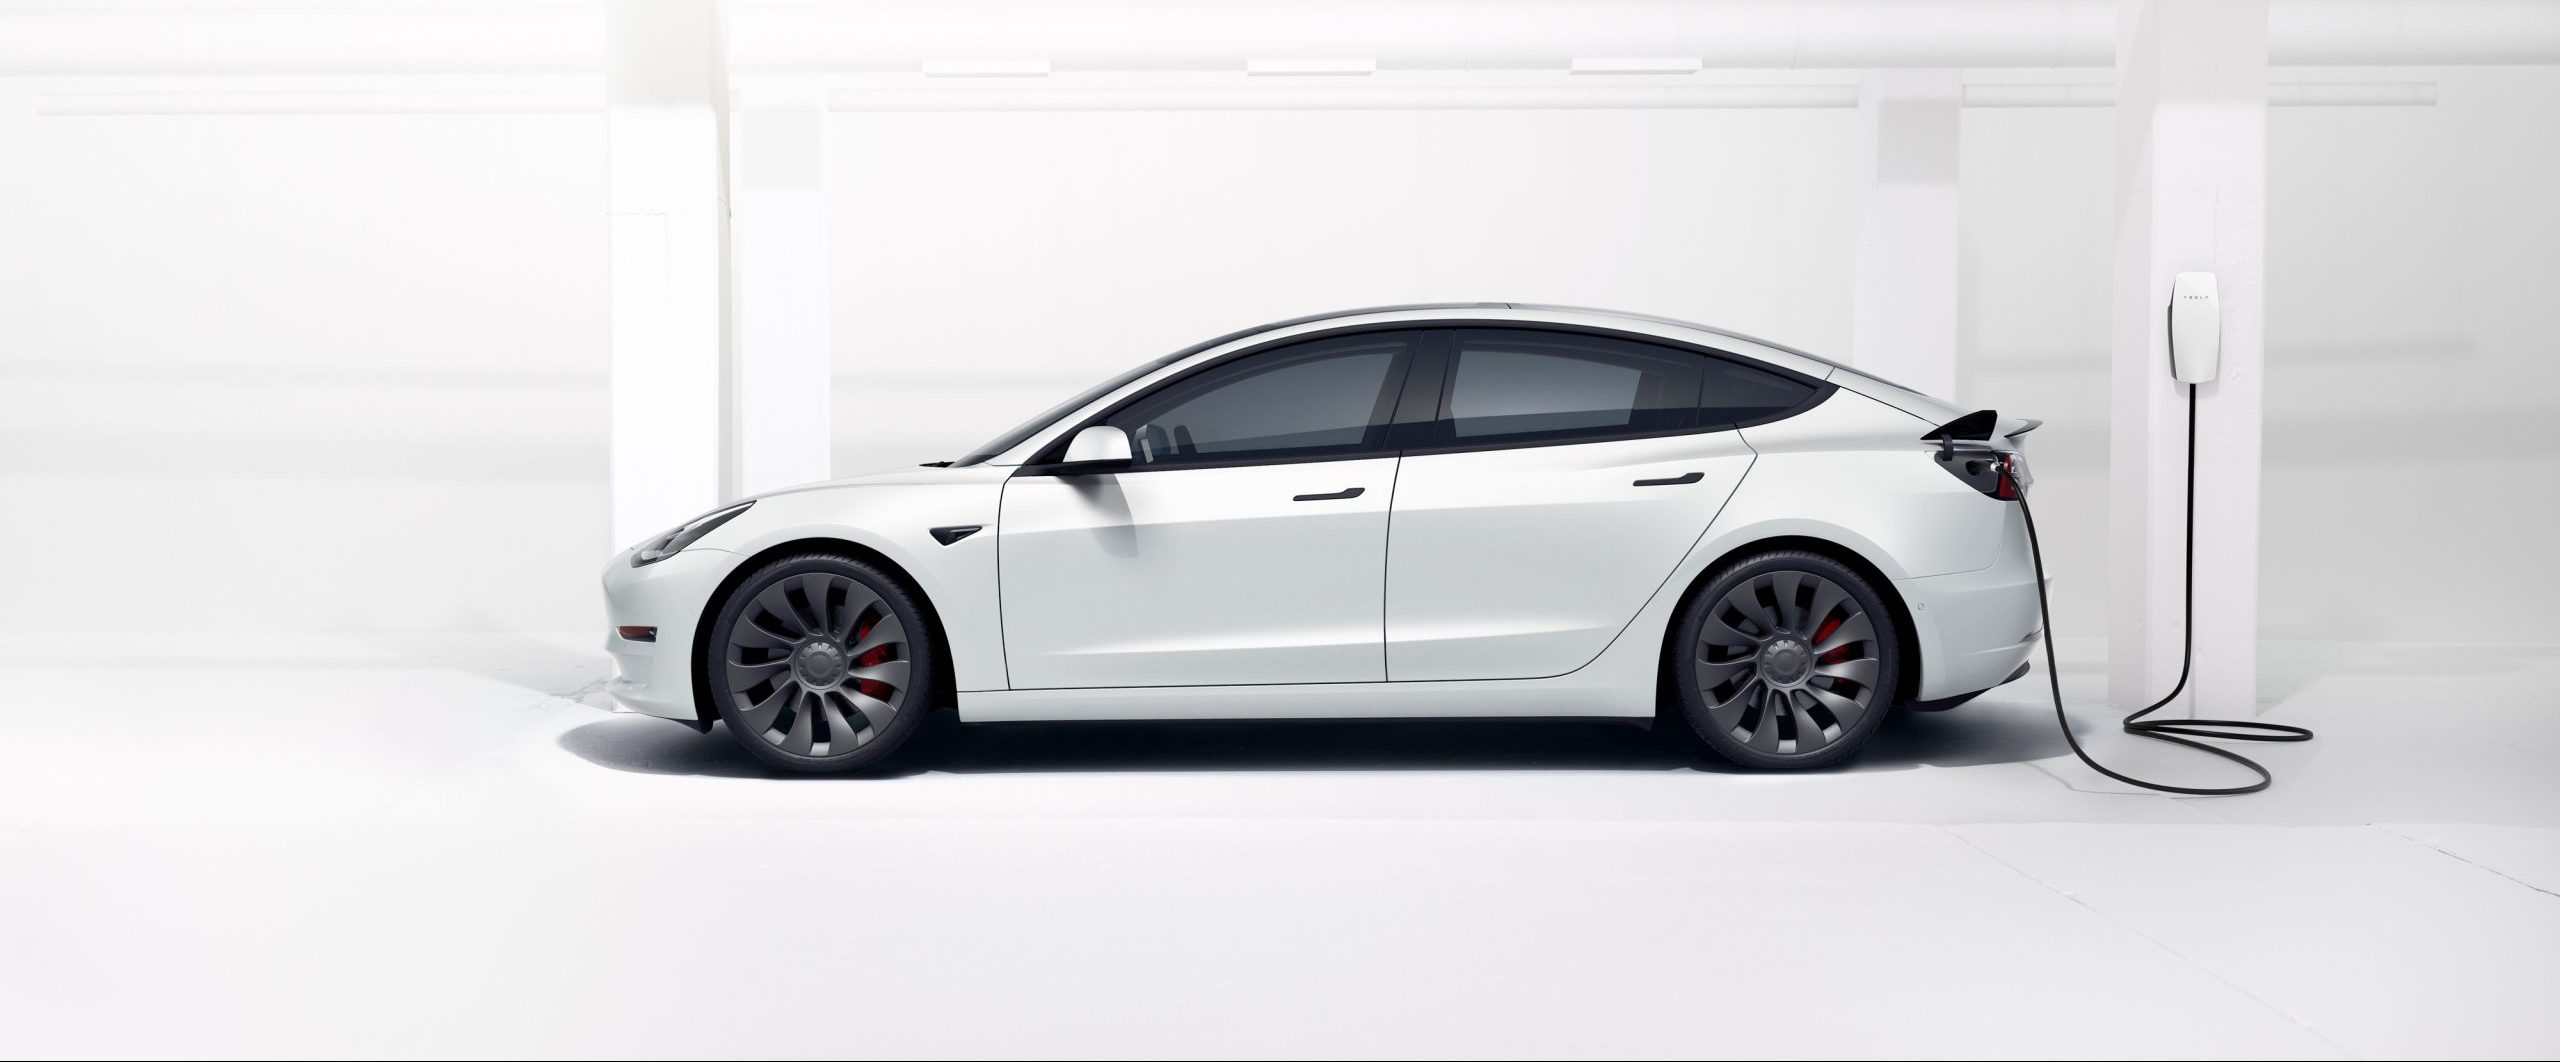 EV subscription company Autonomy launches Tesla Model 3 rental fleet